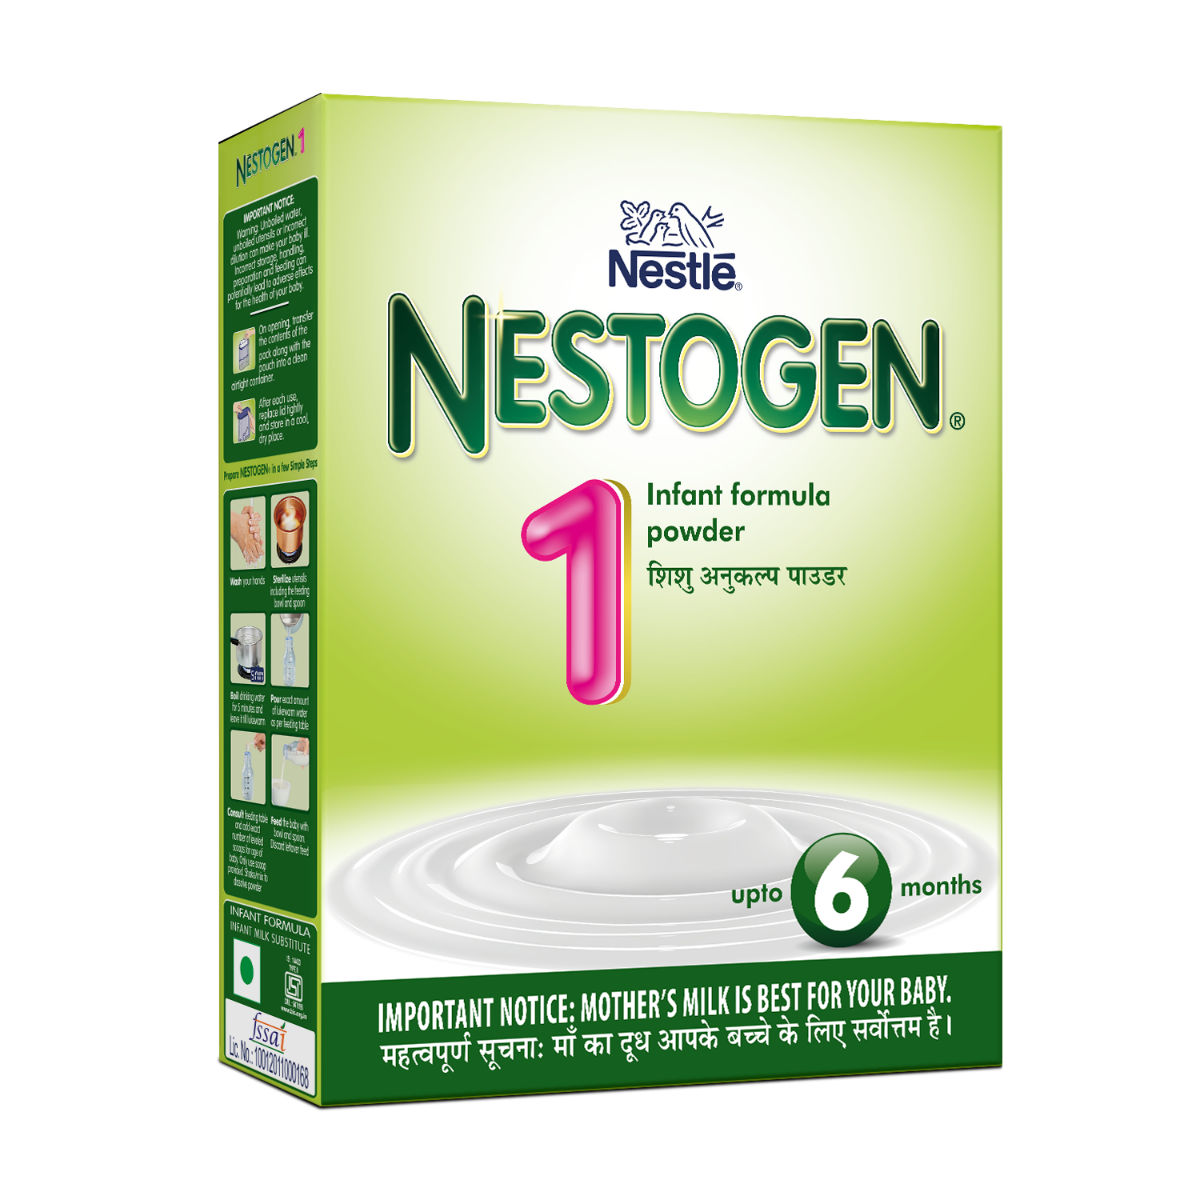 Nestle Nestogen Infant Formula Stage 1 (Up to 6 Months) Powder, 400 gm Refill Pack, Pack of 1 